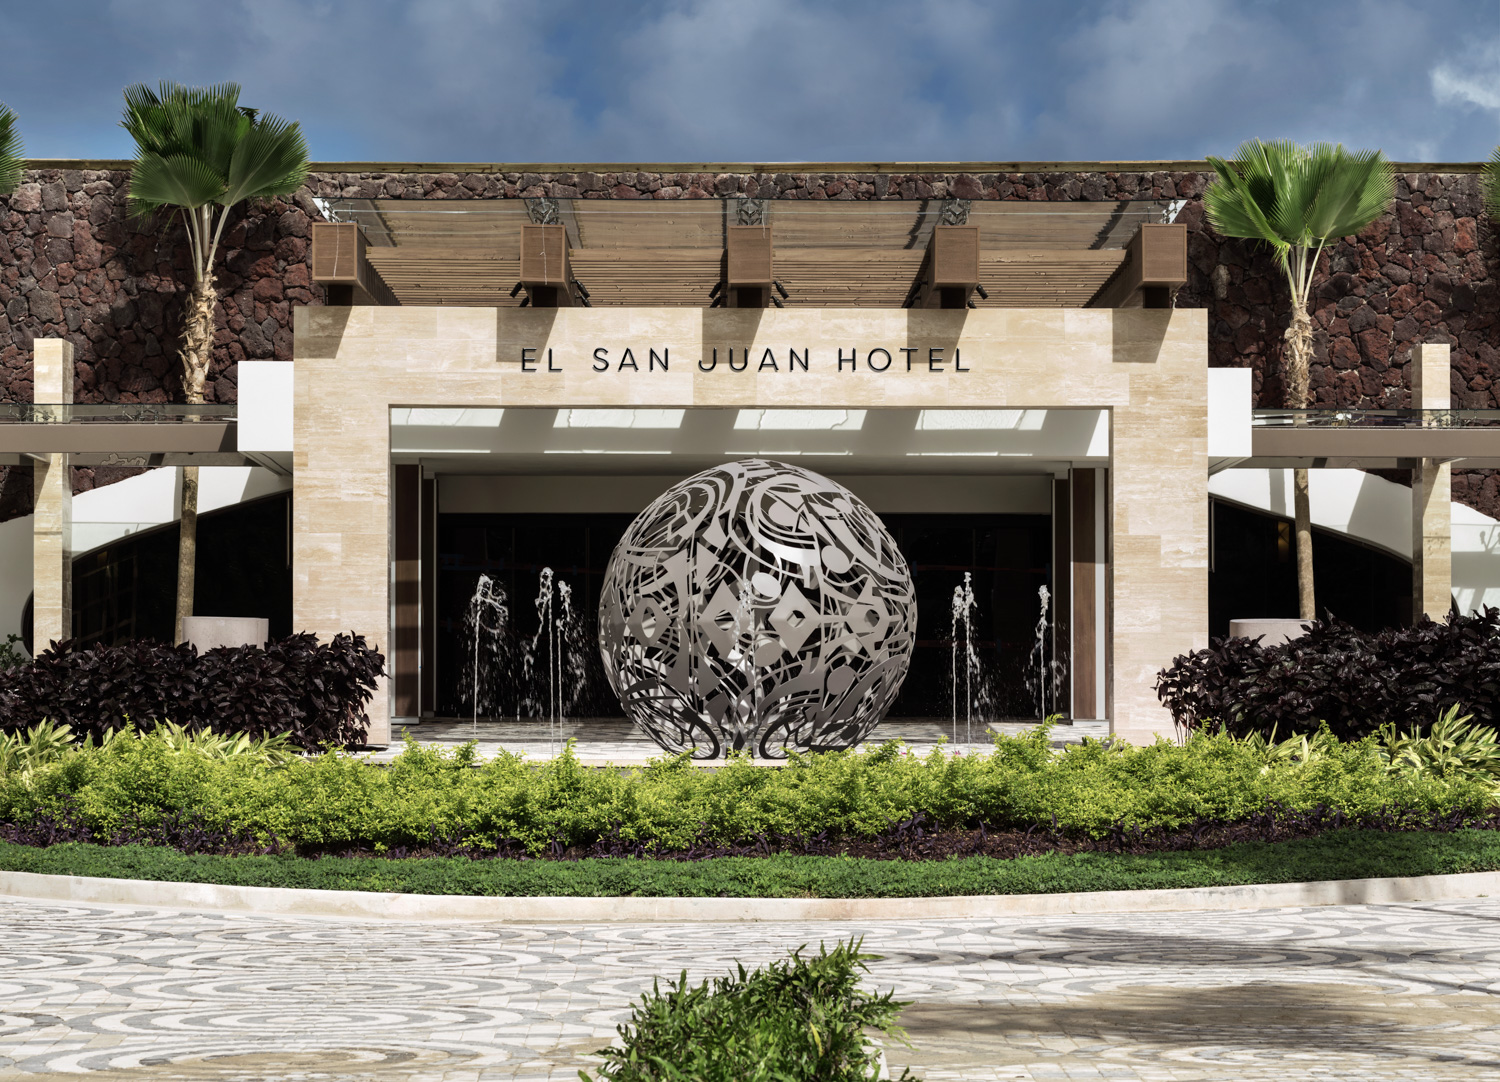 Fairmont El San Juan Hotel Entrance